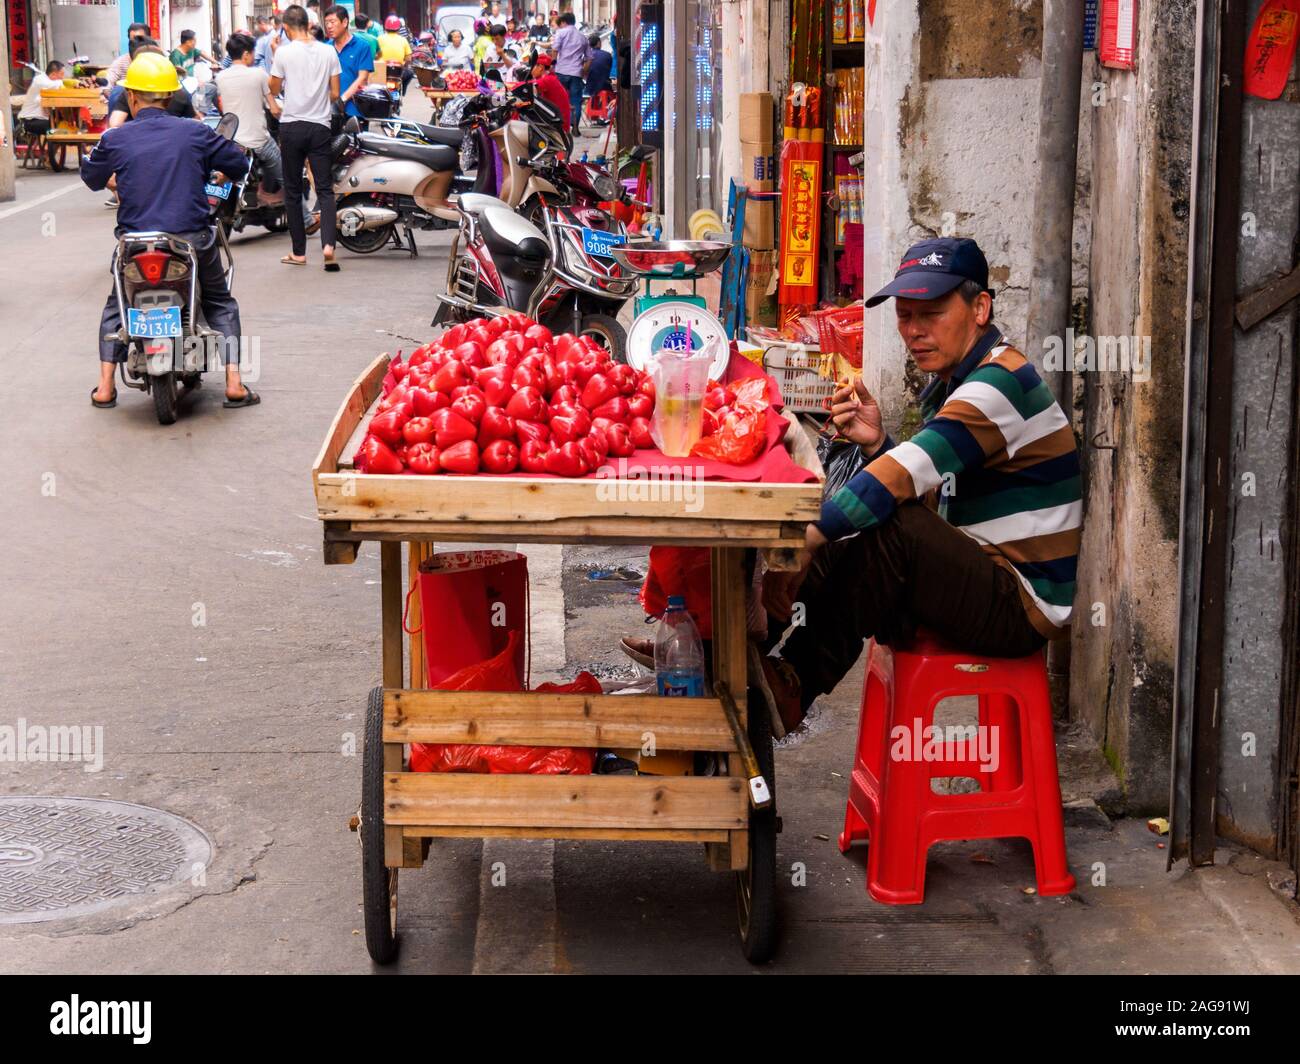 HAIKOU, HAINAN, CHINA - MAR 2 2019 - Street vendor smokes a cigarette while selling tropical wax apples / Jambu fruit from a pushcart Stock Photo